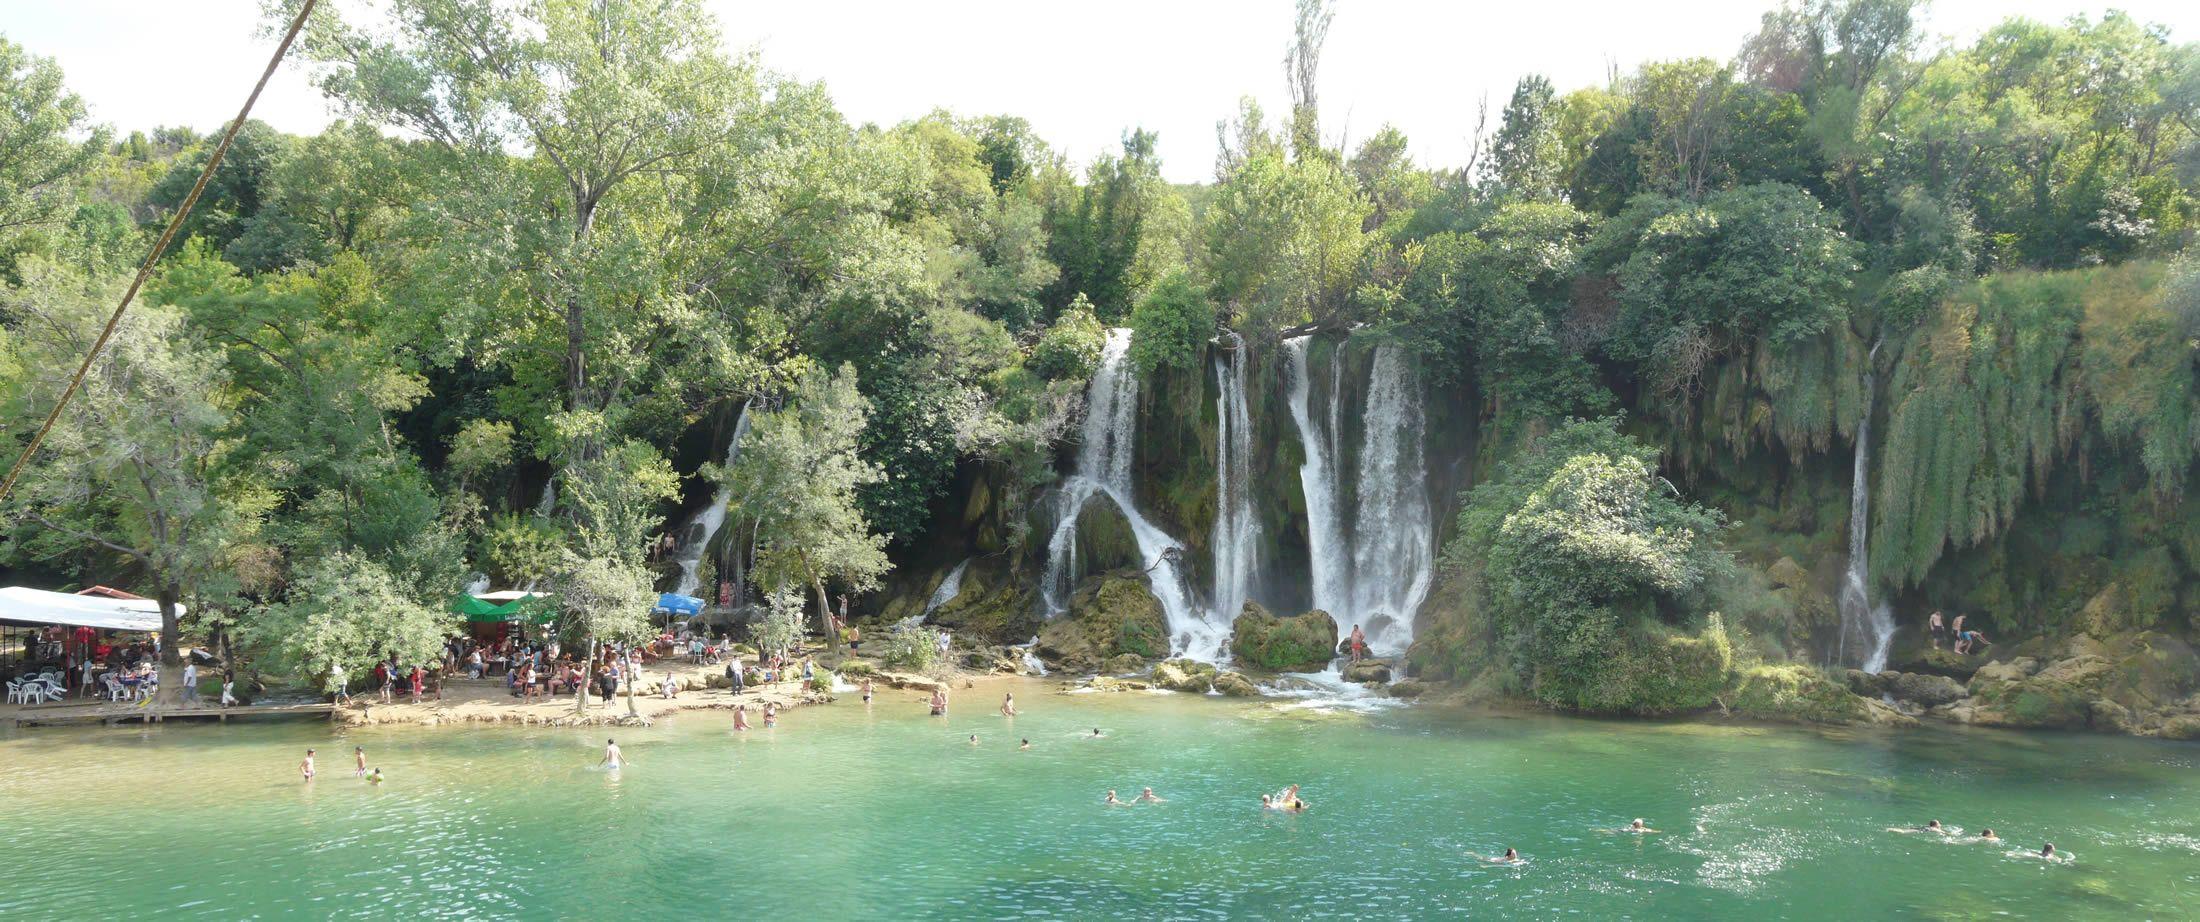 Bosnia and herzegovina waterfall